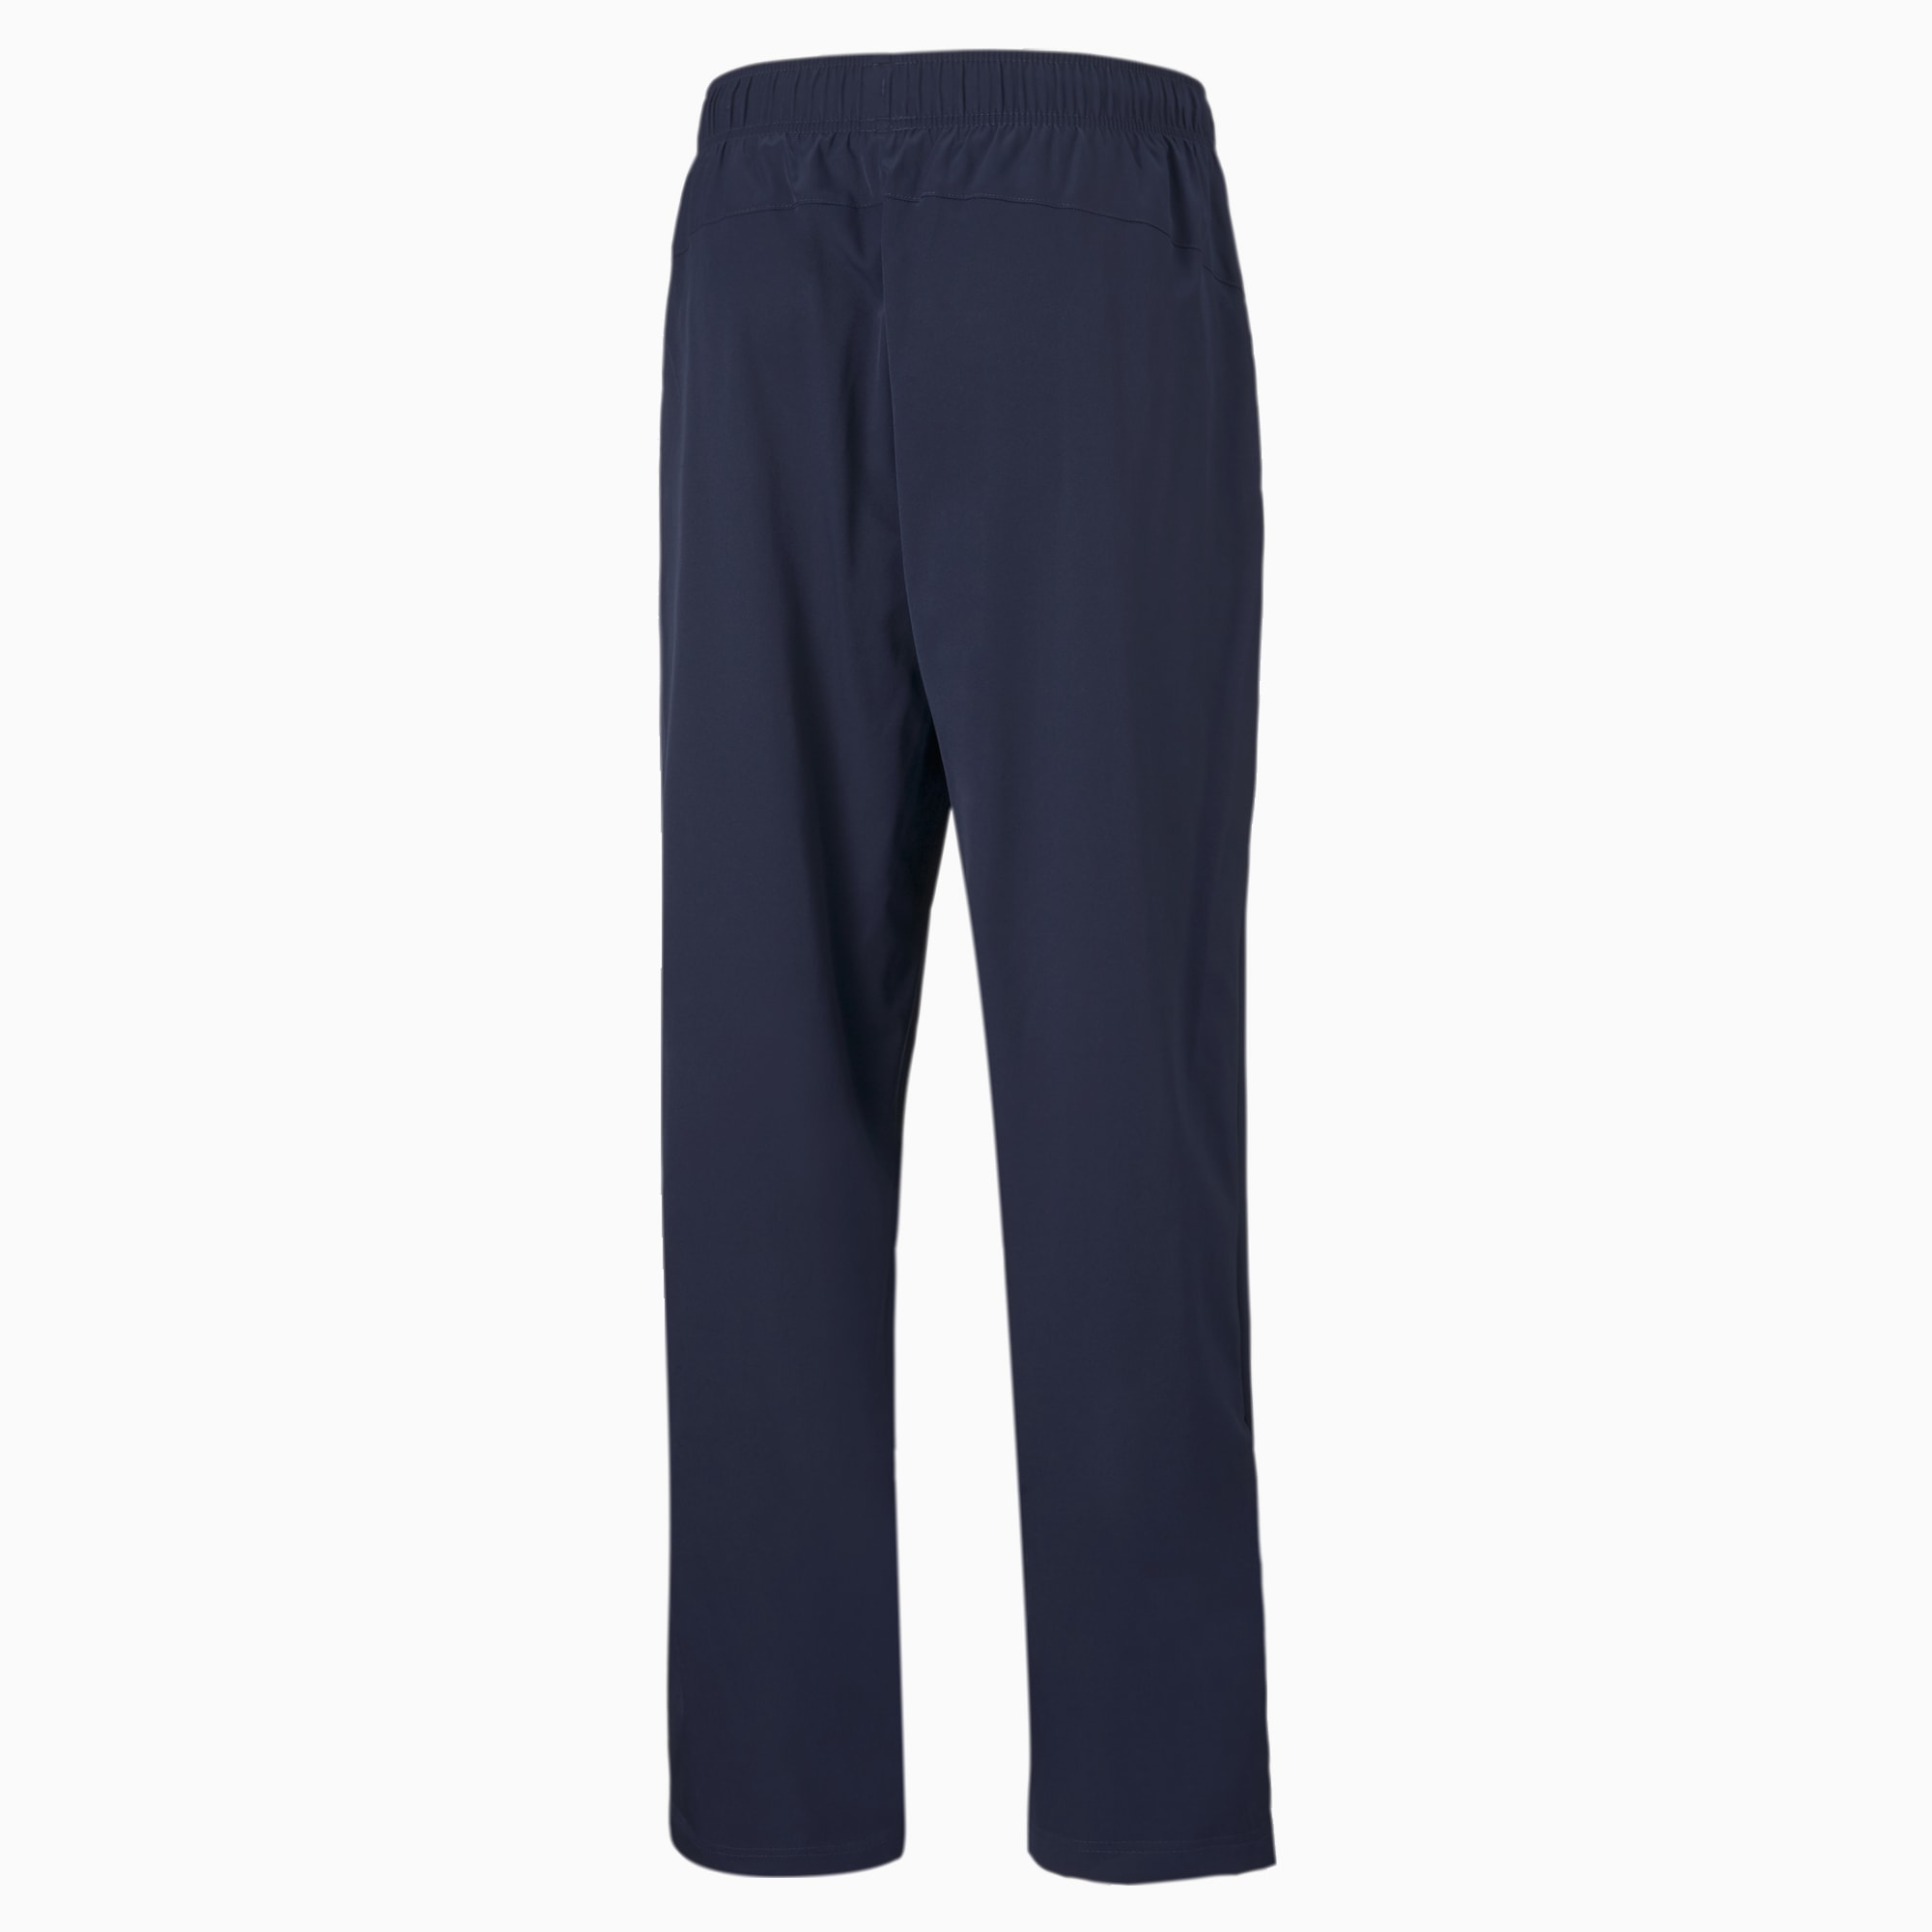 PUMA Active Woven Men's Sweatpants, Peacoat, Size XS/L, Clothing